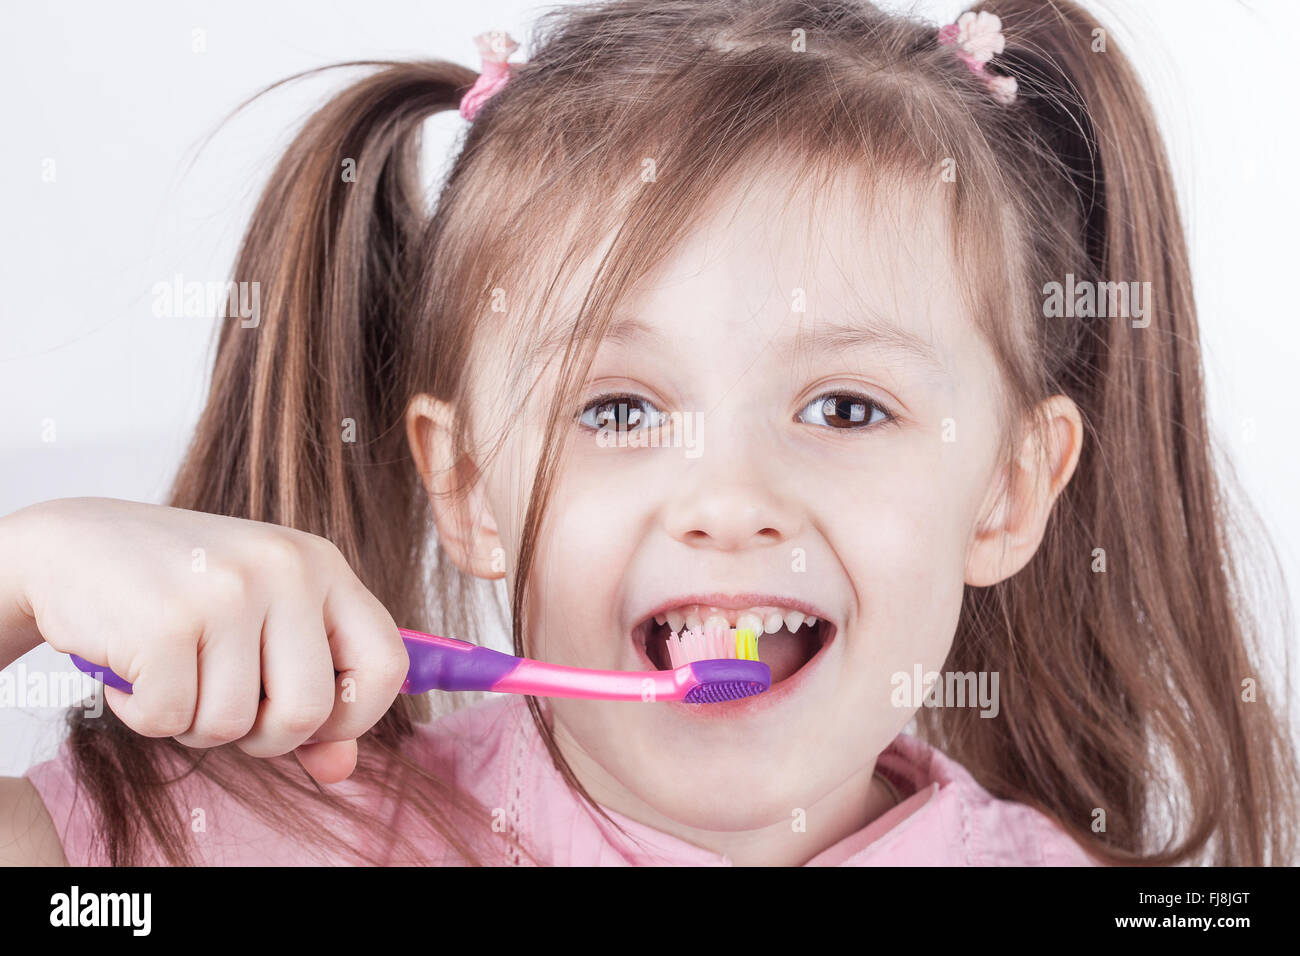 dental hygiene. happy little girl brushing her teeth. isolated Stock Photo